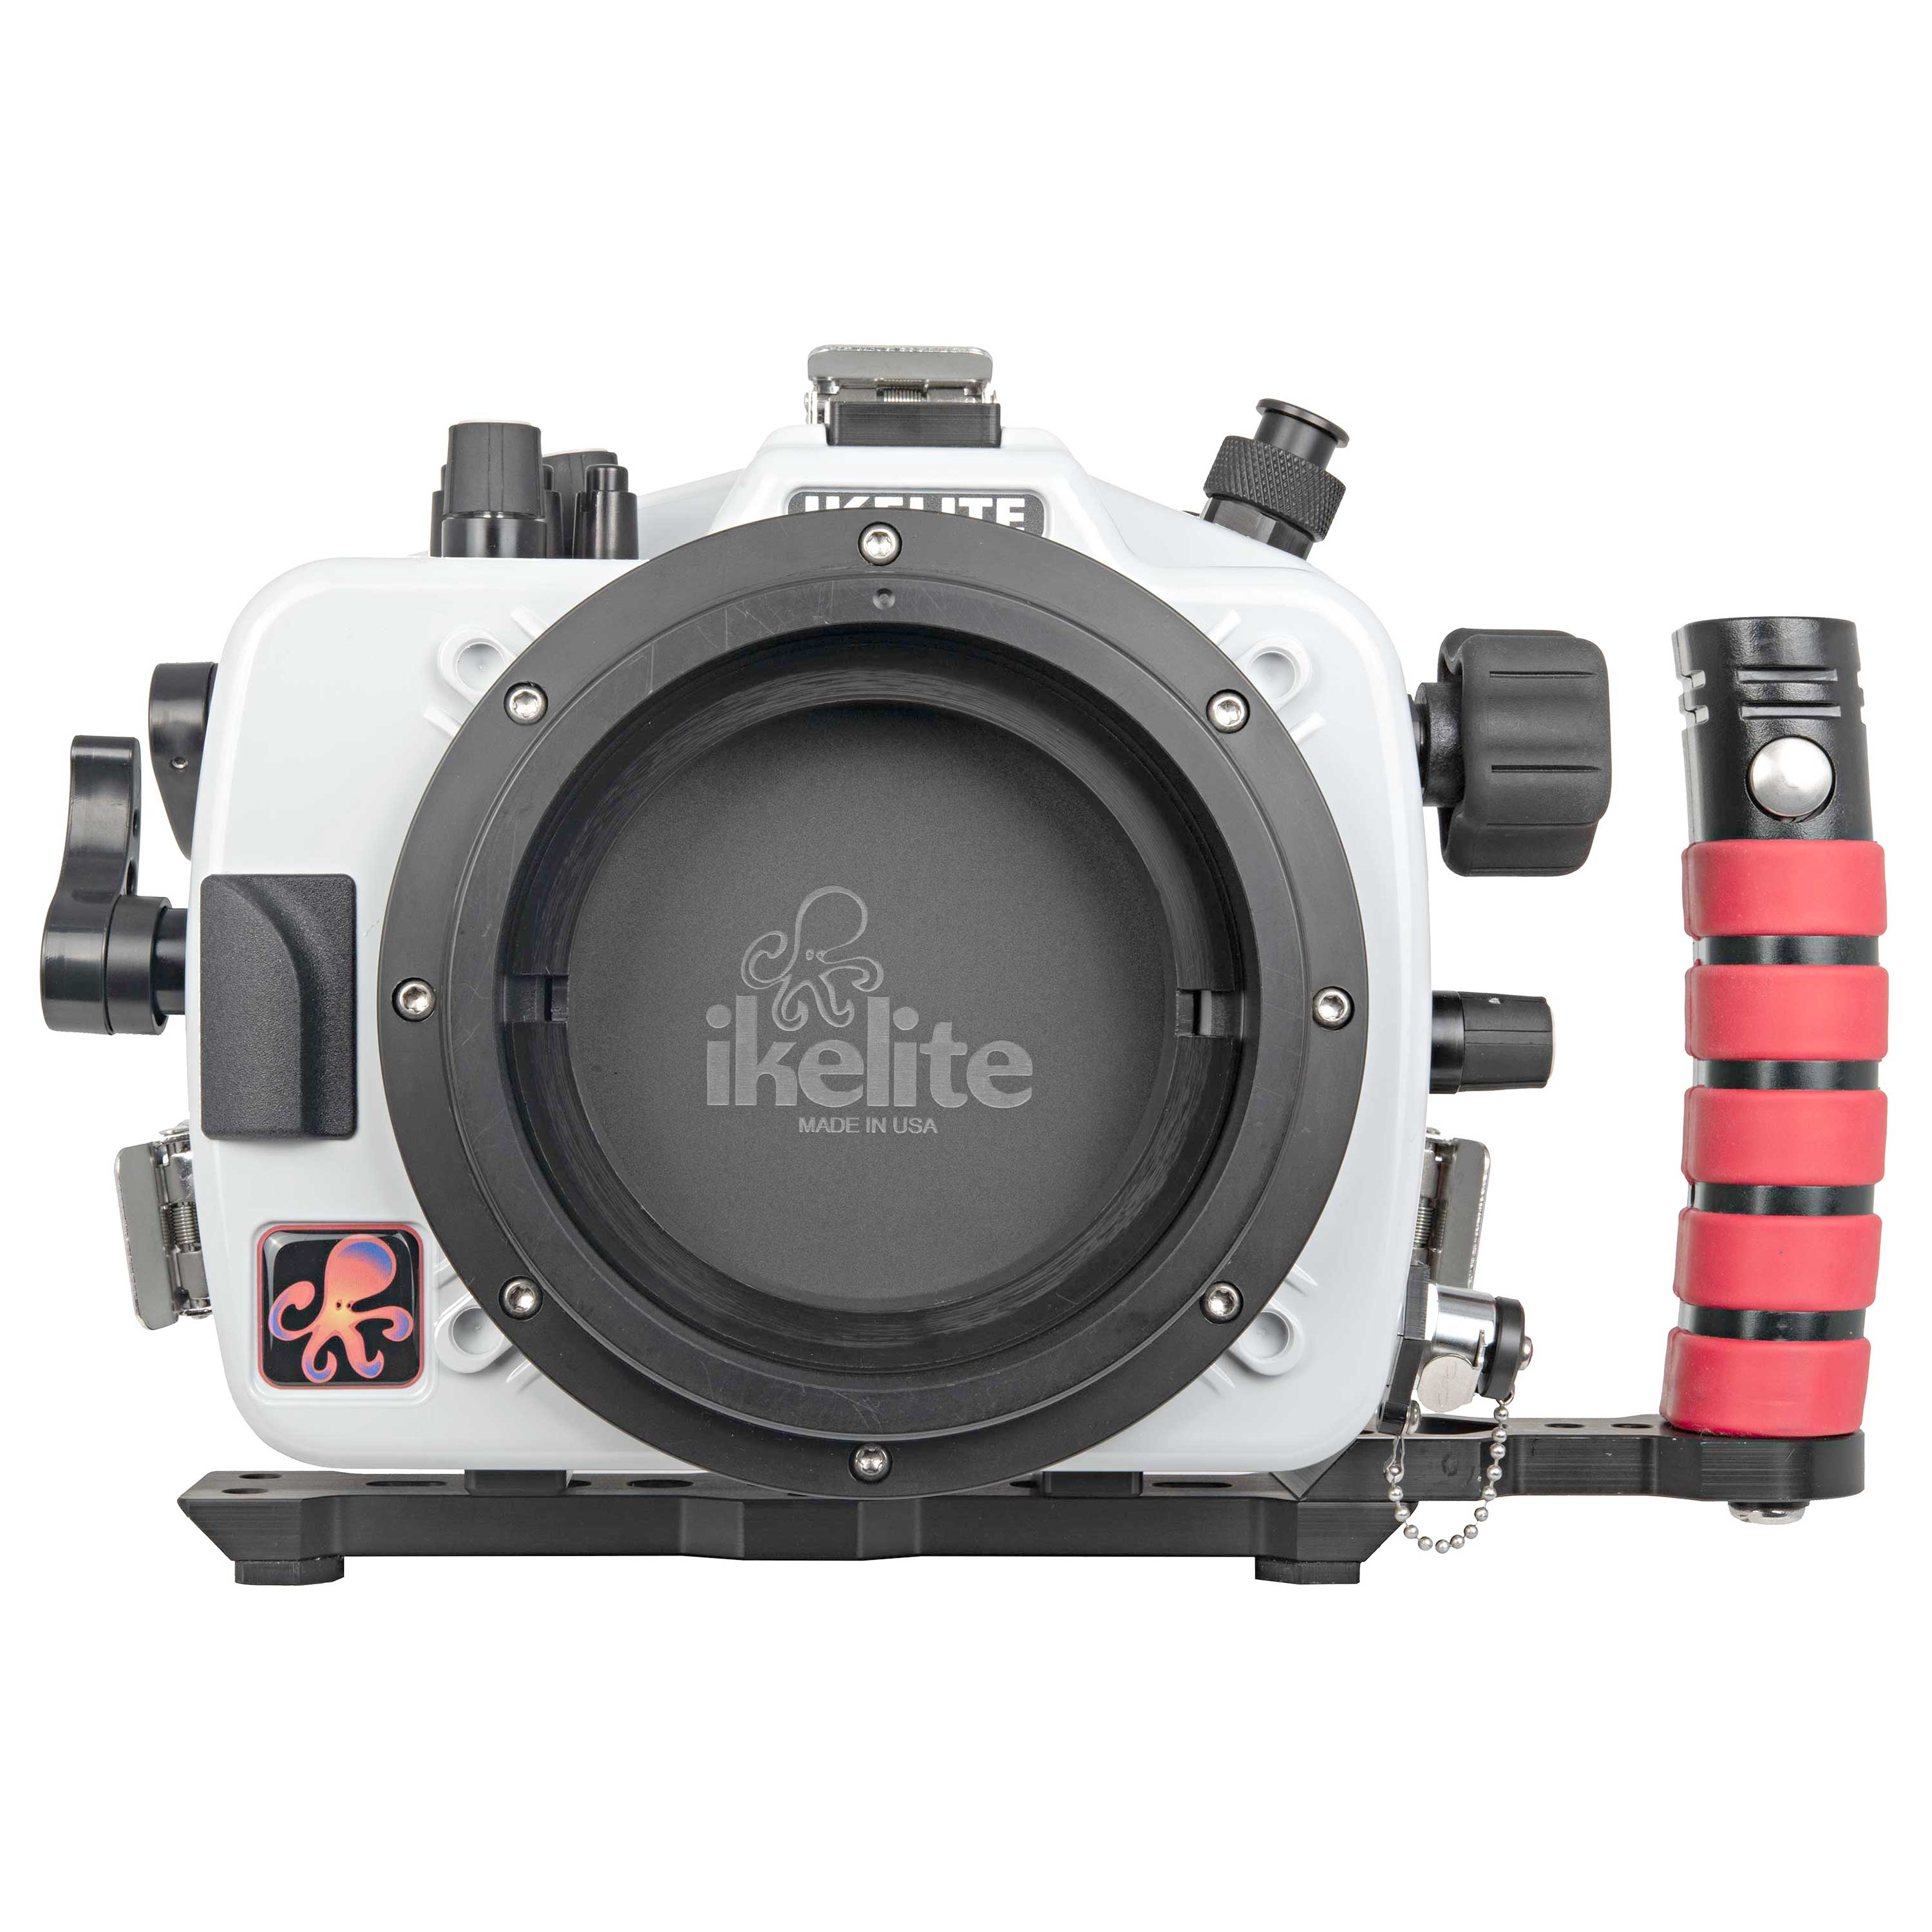 200DL Underwater Housing for Canon EOS 750D Rebel T6i, Kiss X8i DSLR Cameras